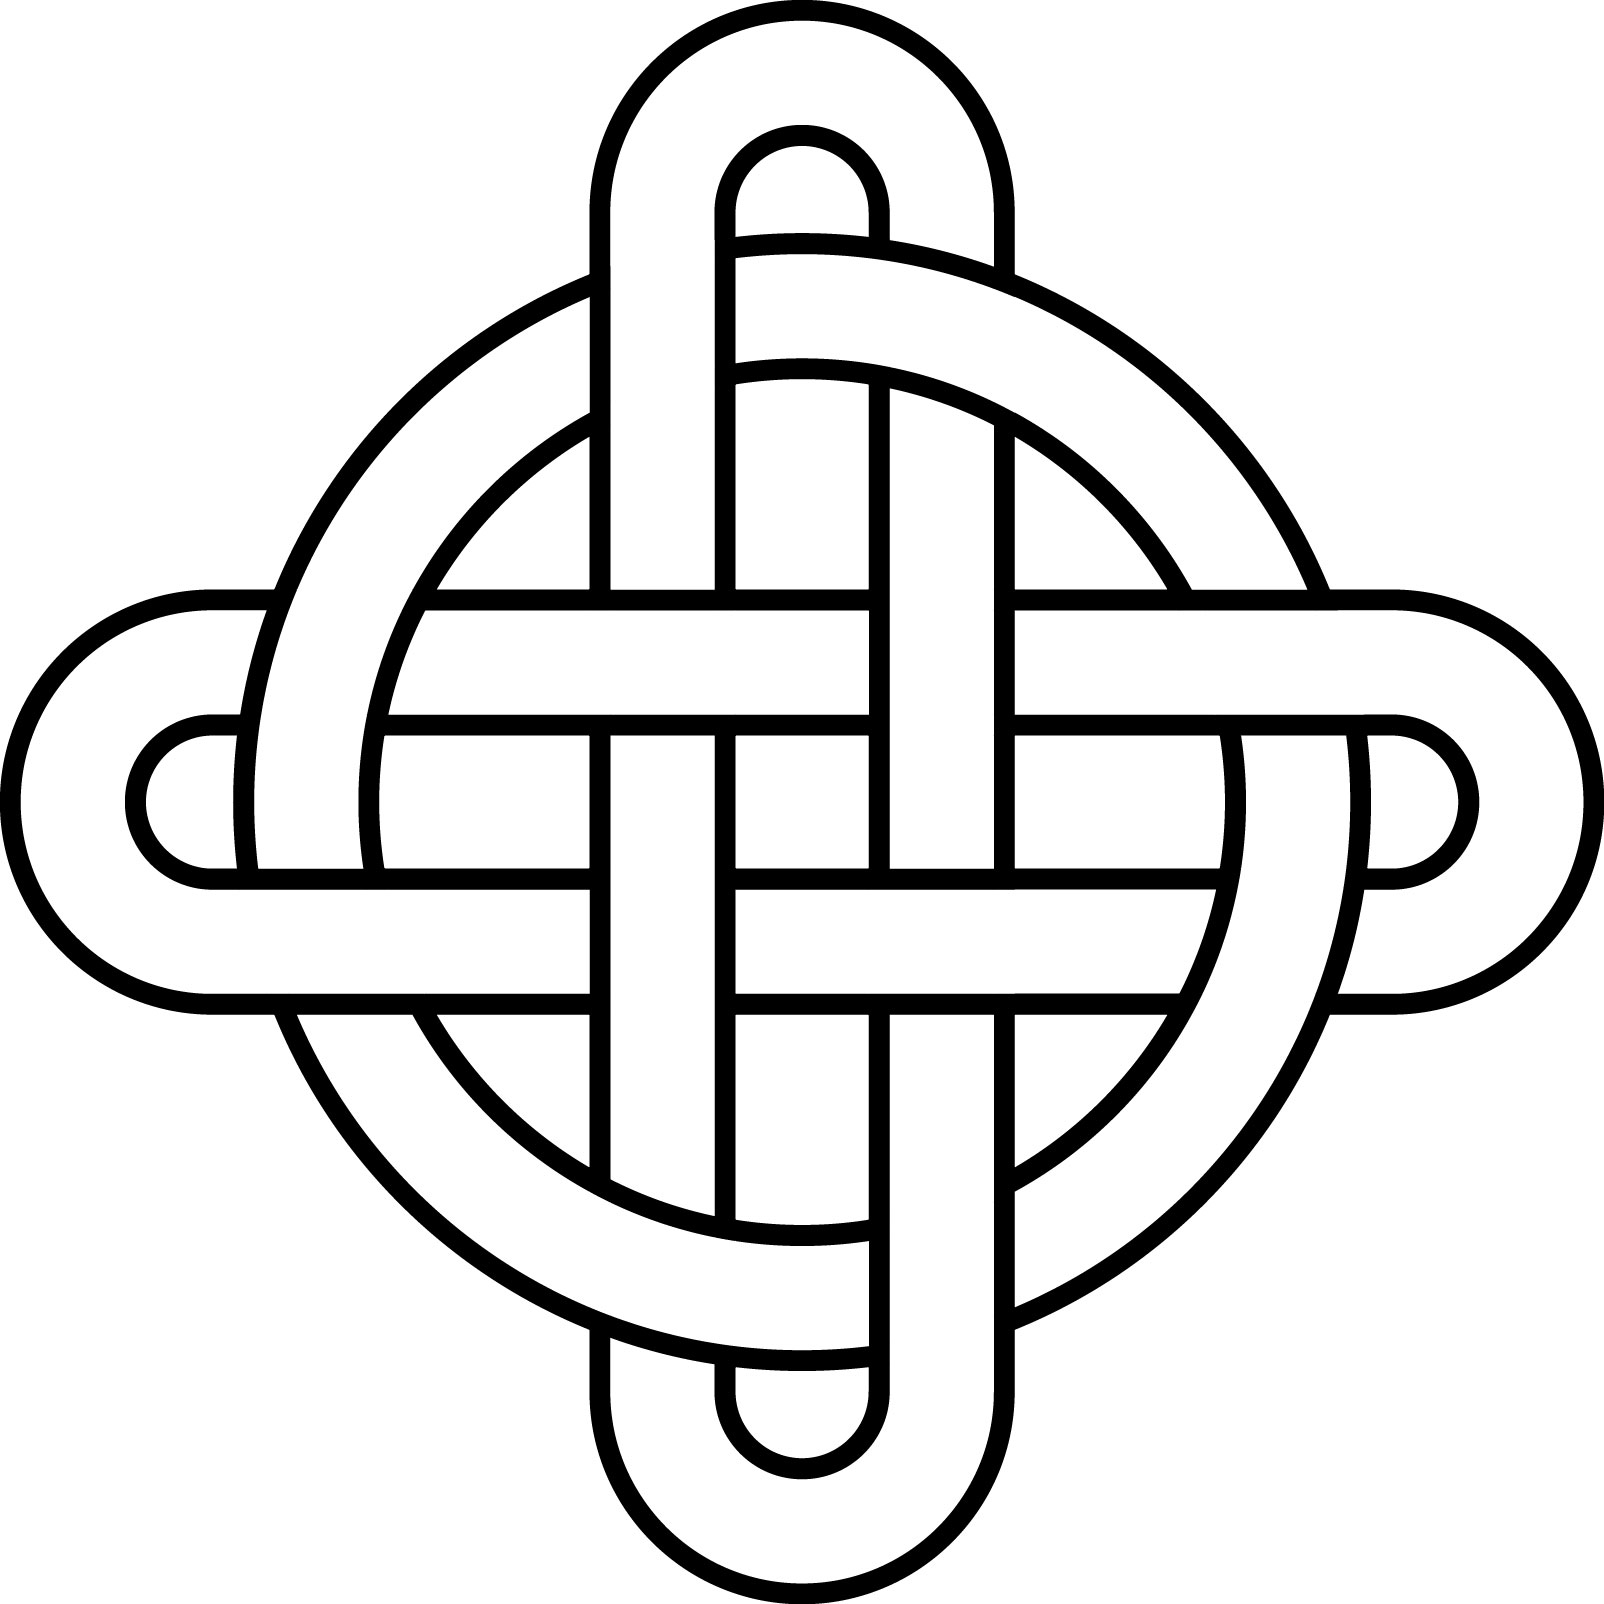 Printable Celtic Knot Patterns - Printable World Holiday